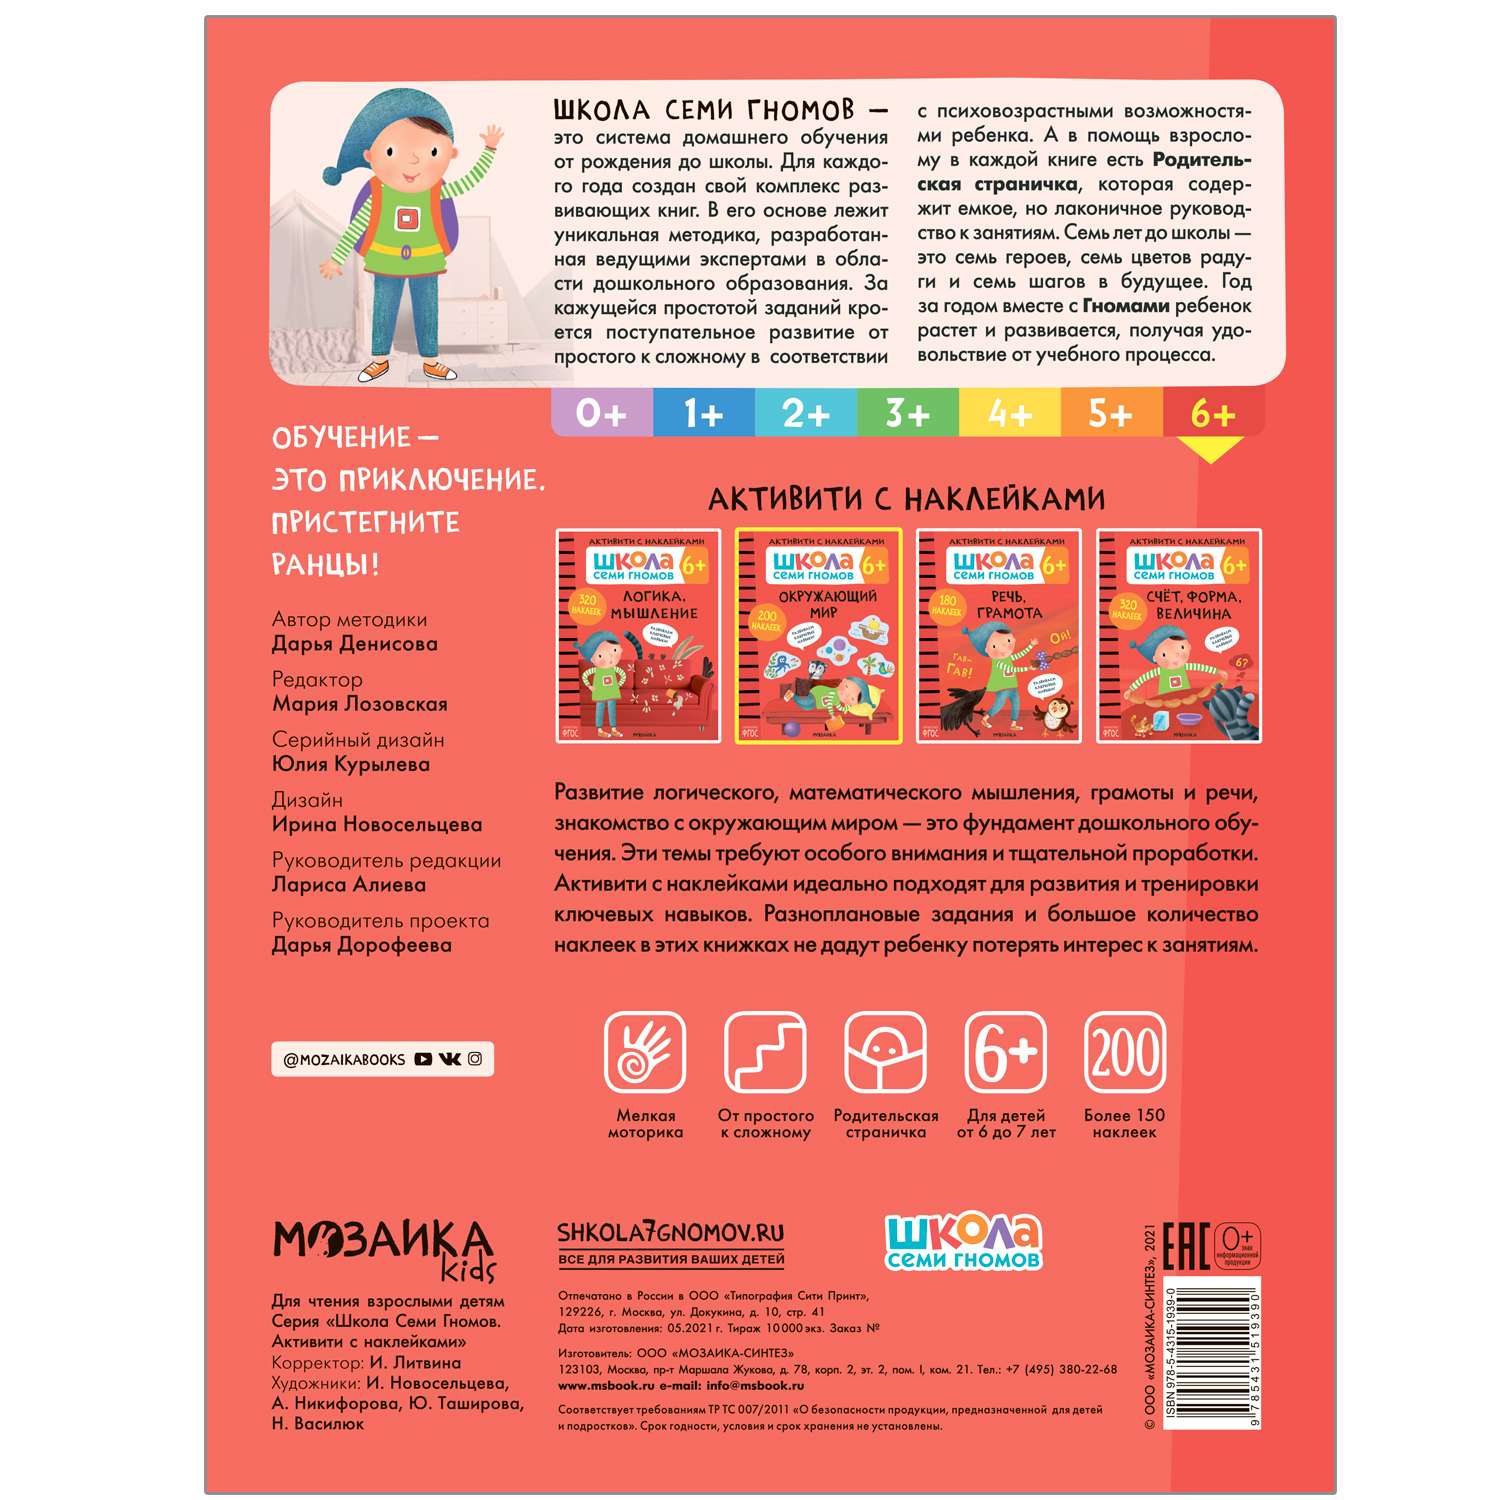 Книга МОЗАИКА kids Школа Cеми Гномов Активити с наклейками Окружающий мир 6 - фото 5